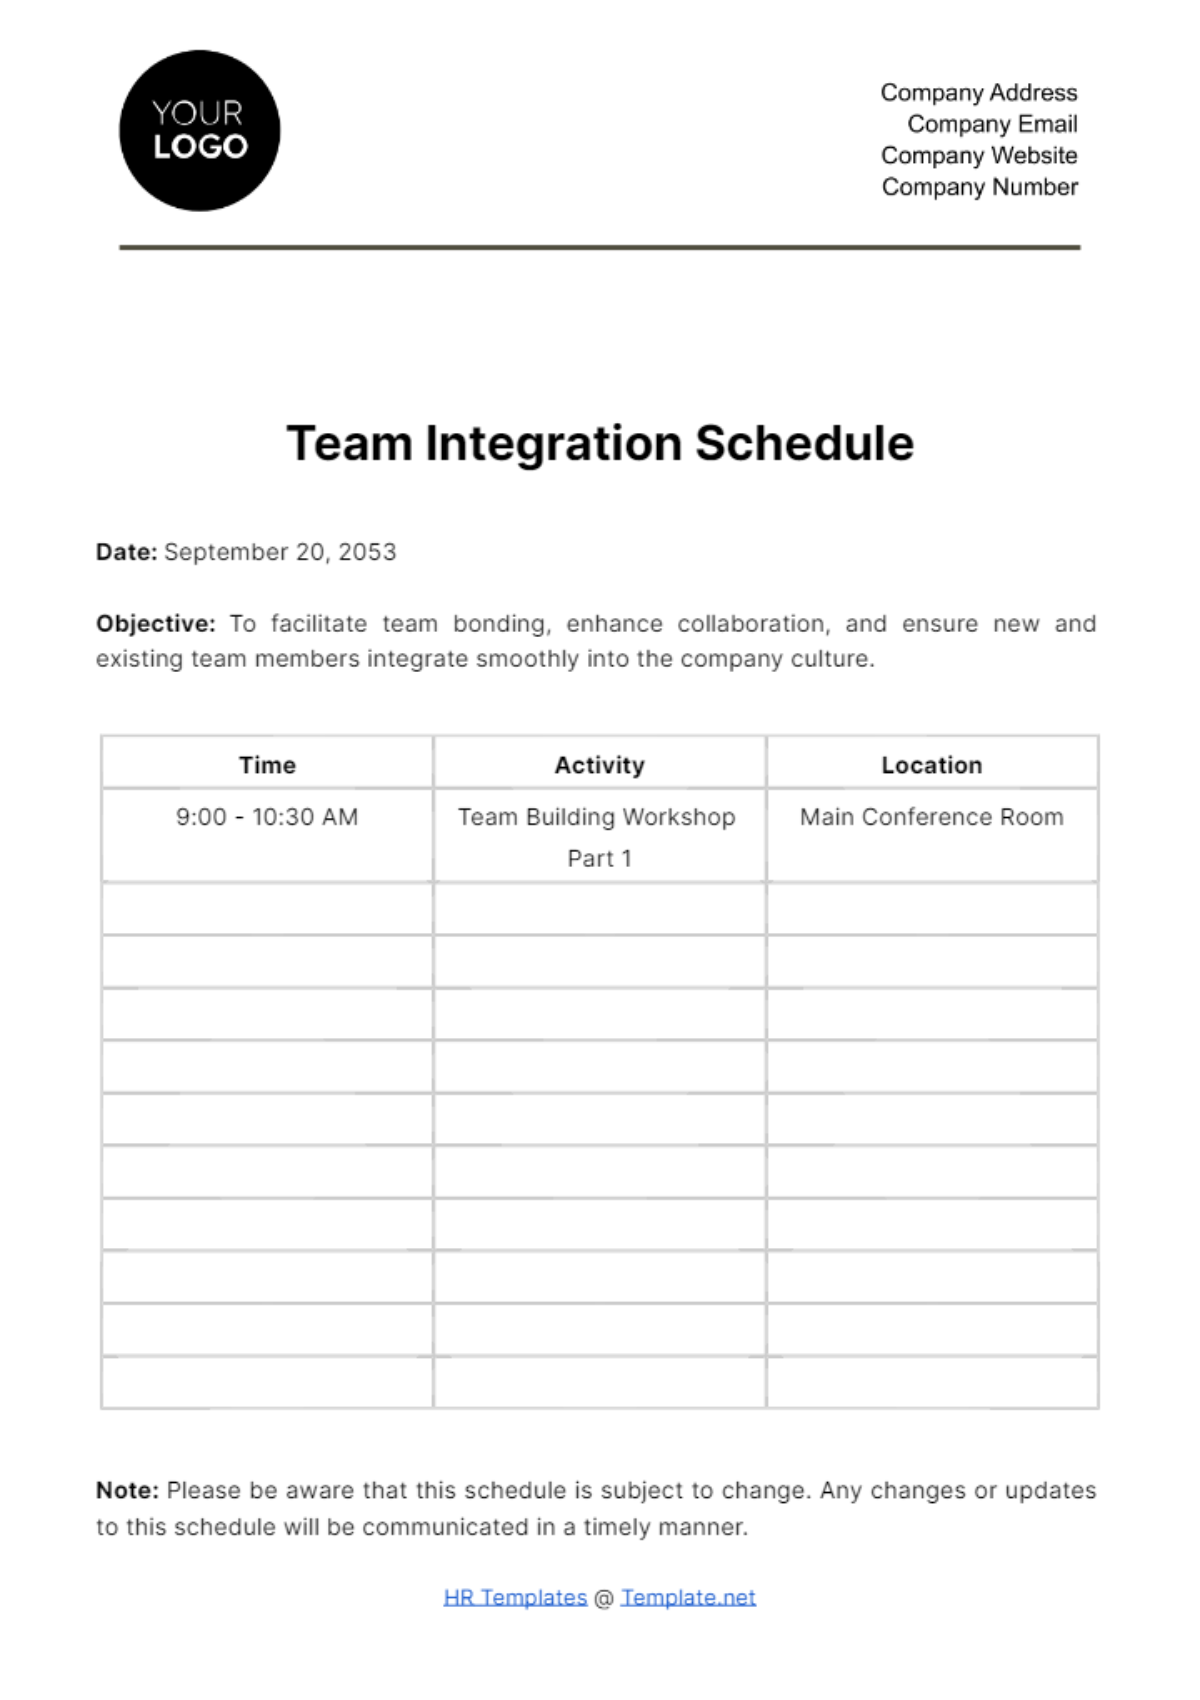 Team Integration Schedule HR Template